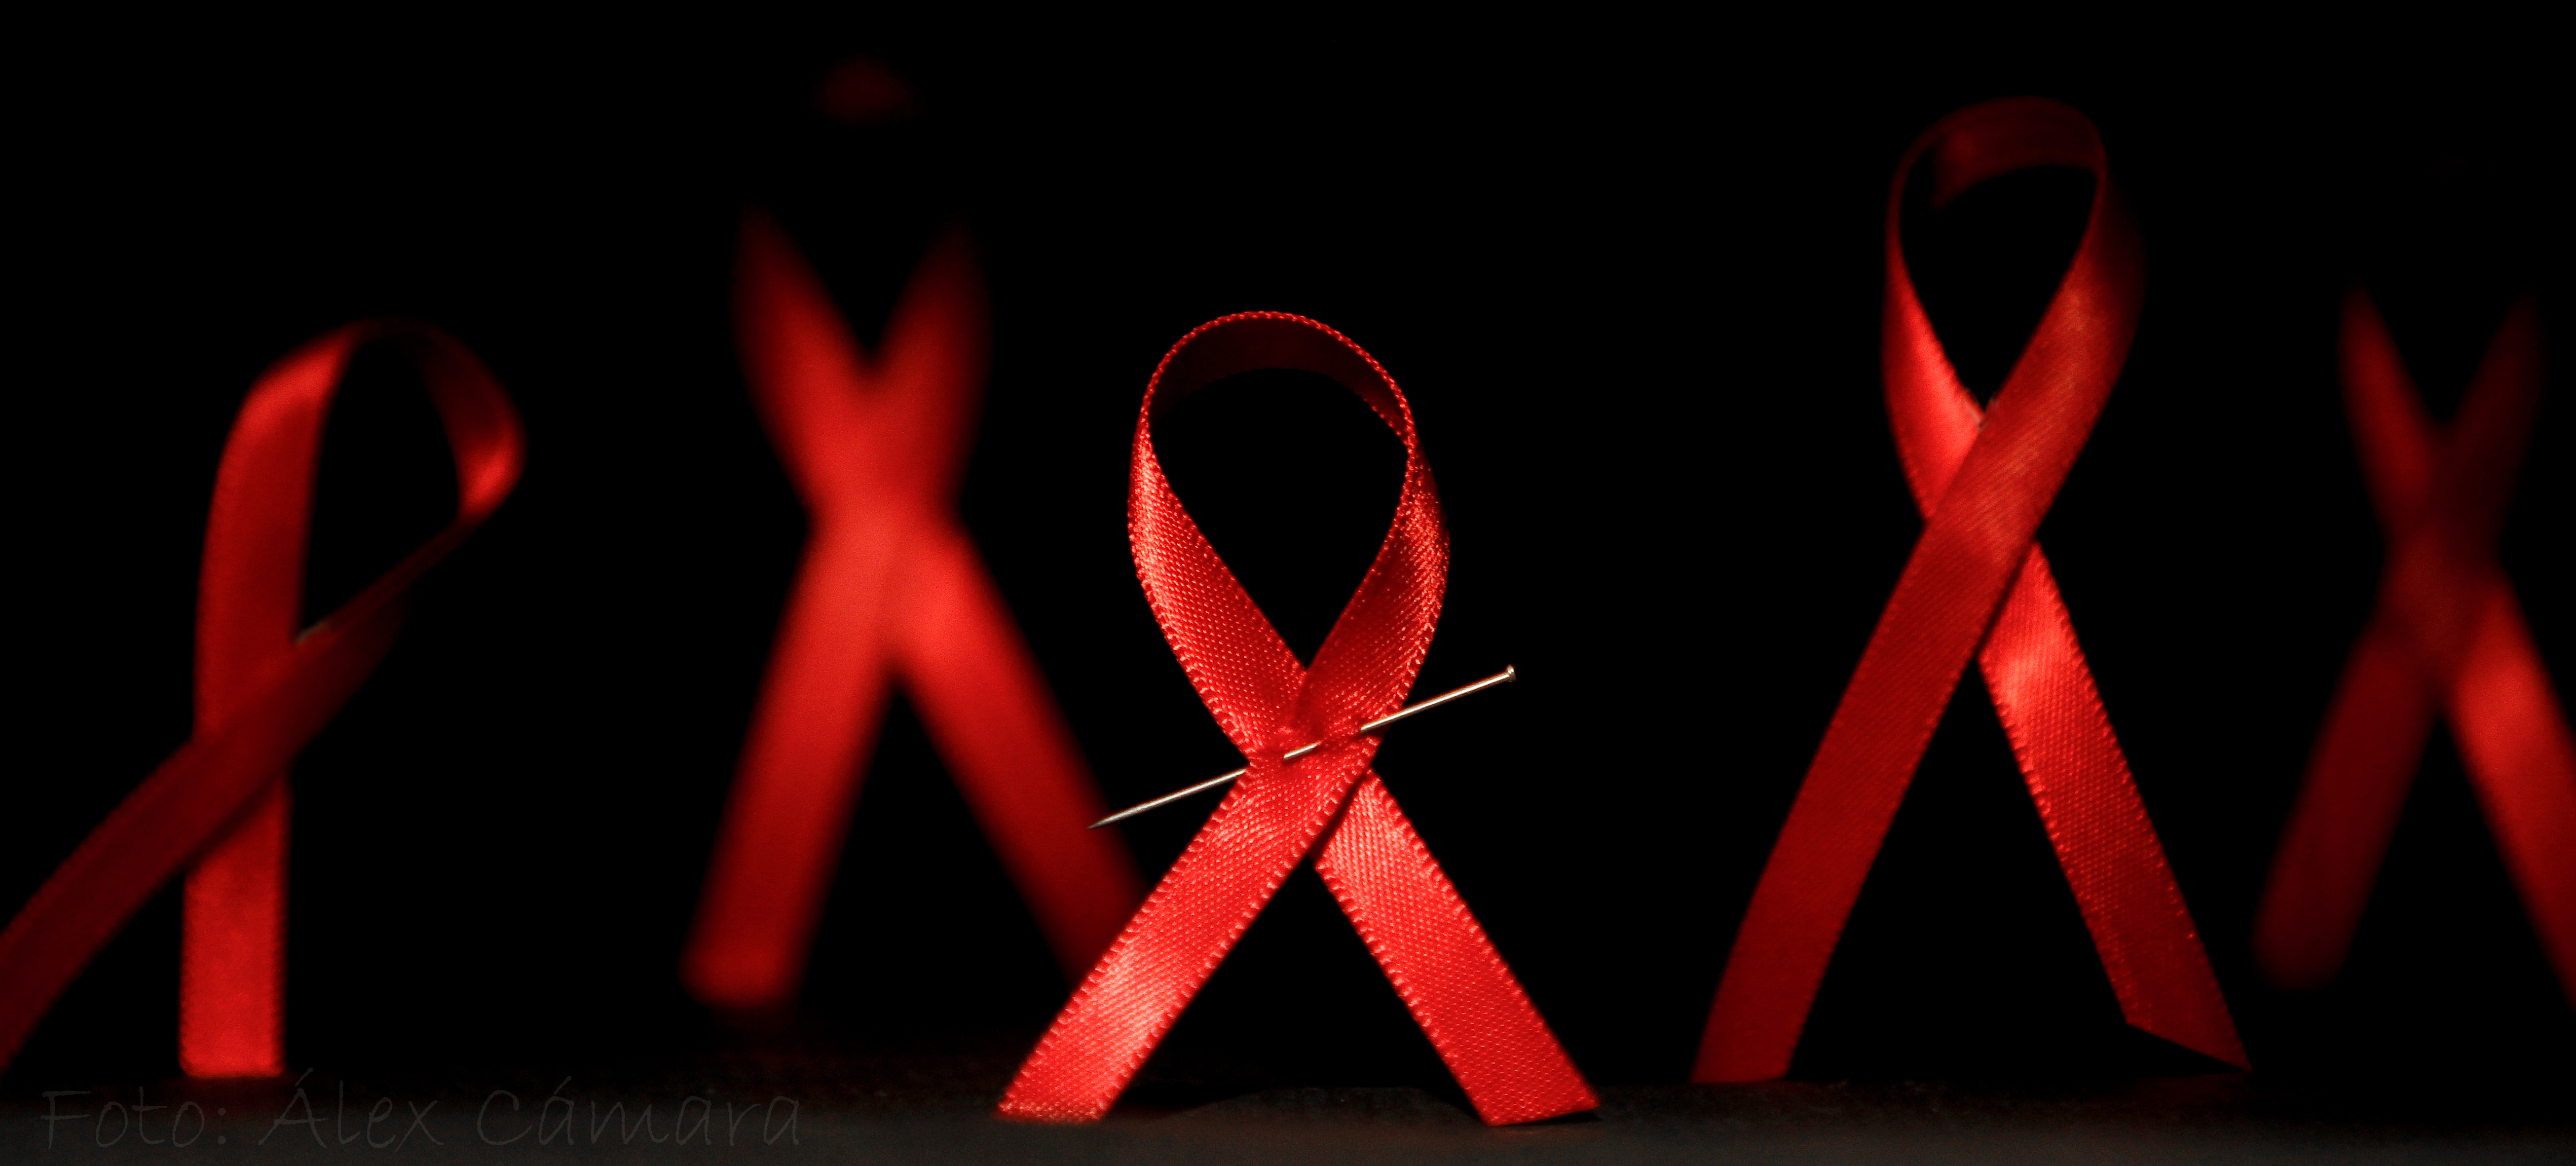 Ю вич. ВИЧ СПИД. Красная ленточка на черном фоне. СПИД картинки. ВИЧ на черном фоне.